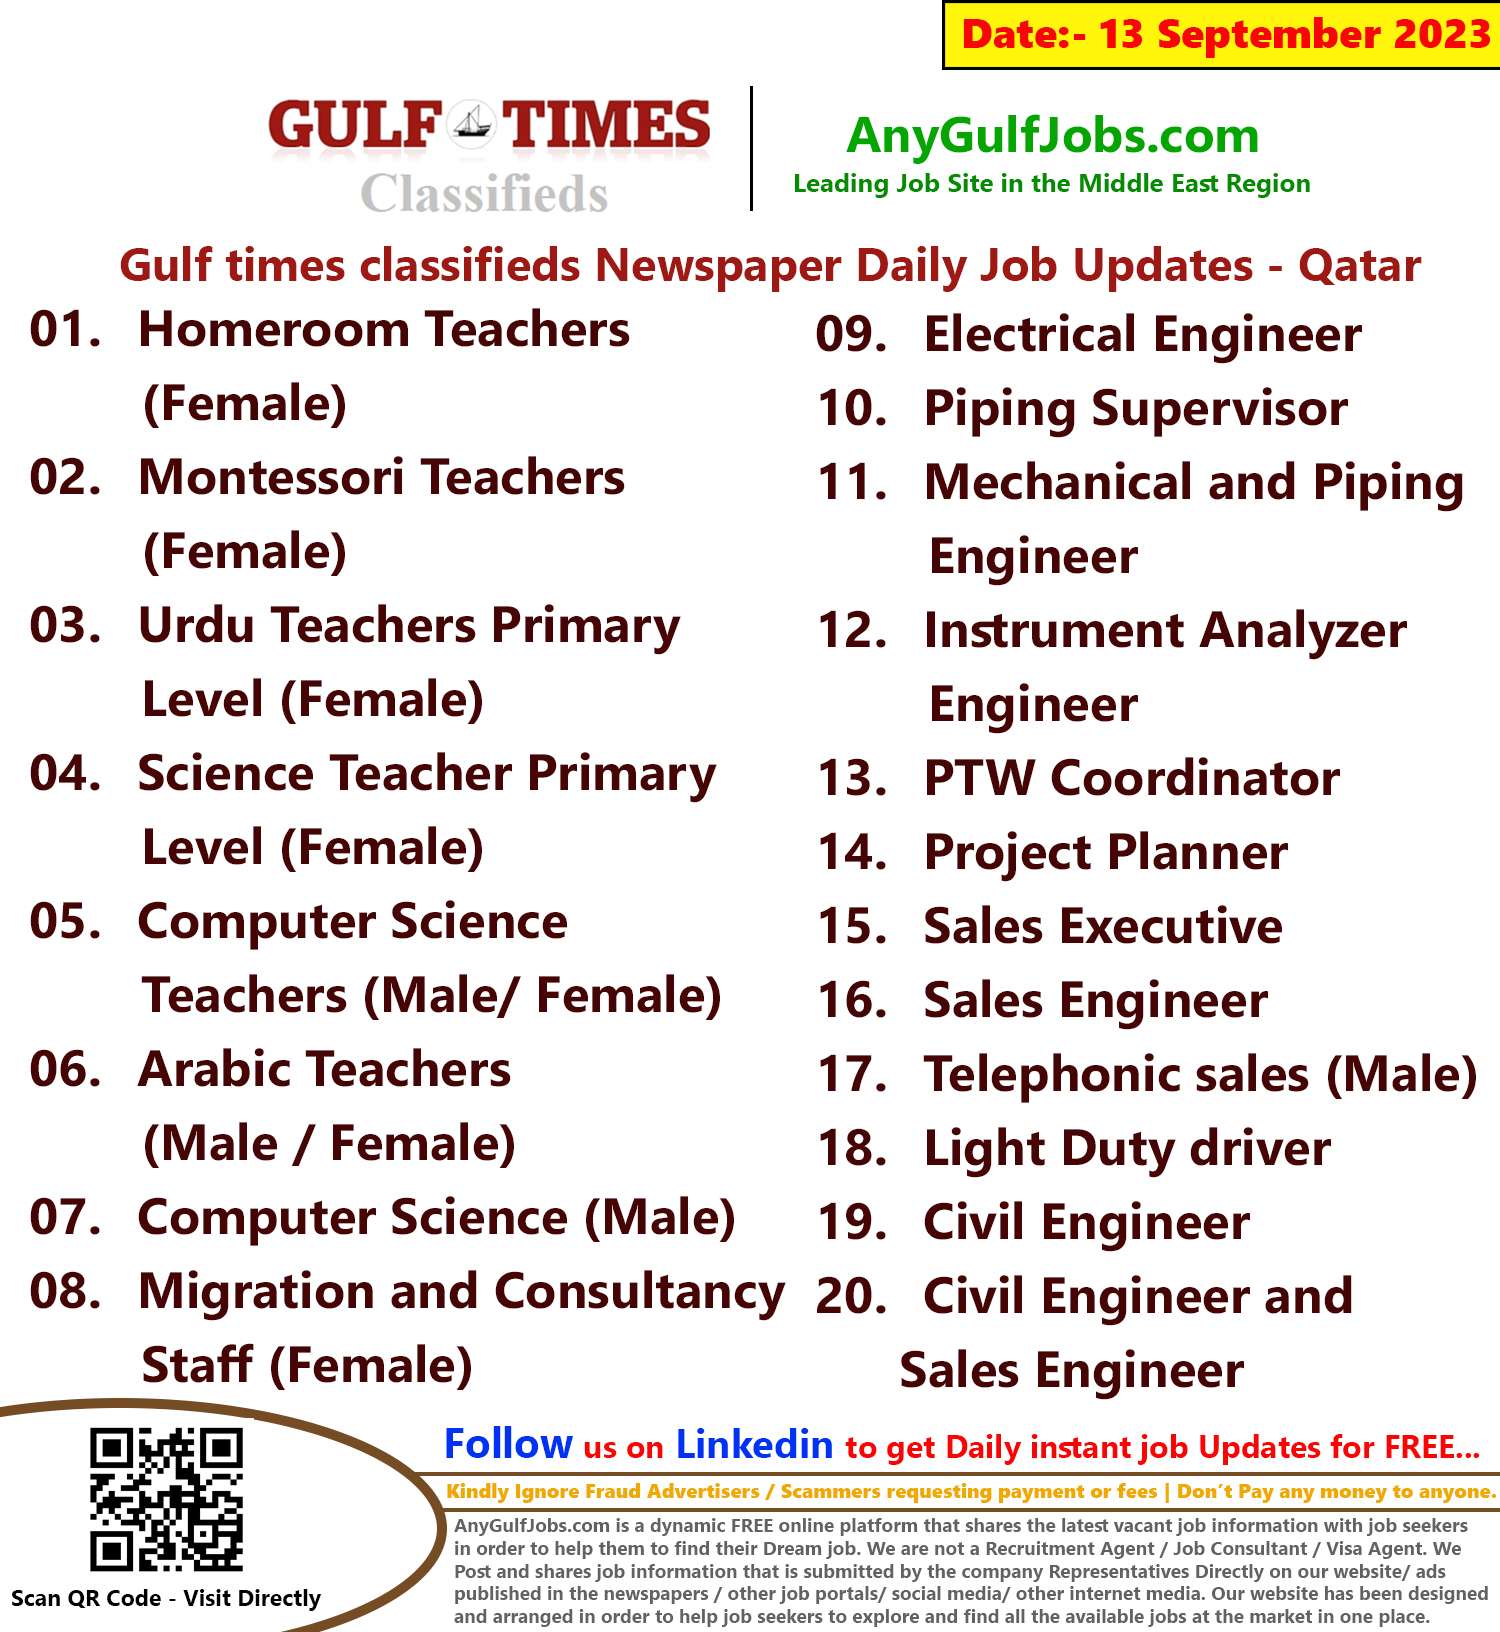 Gulf times classifieds Job Vacancies Qatar - 13 September 2023